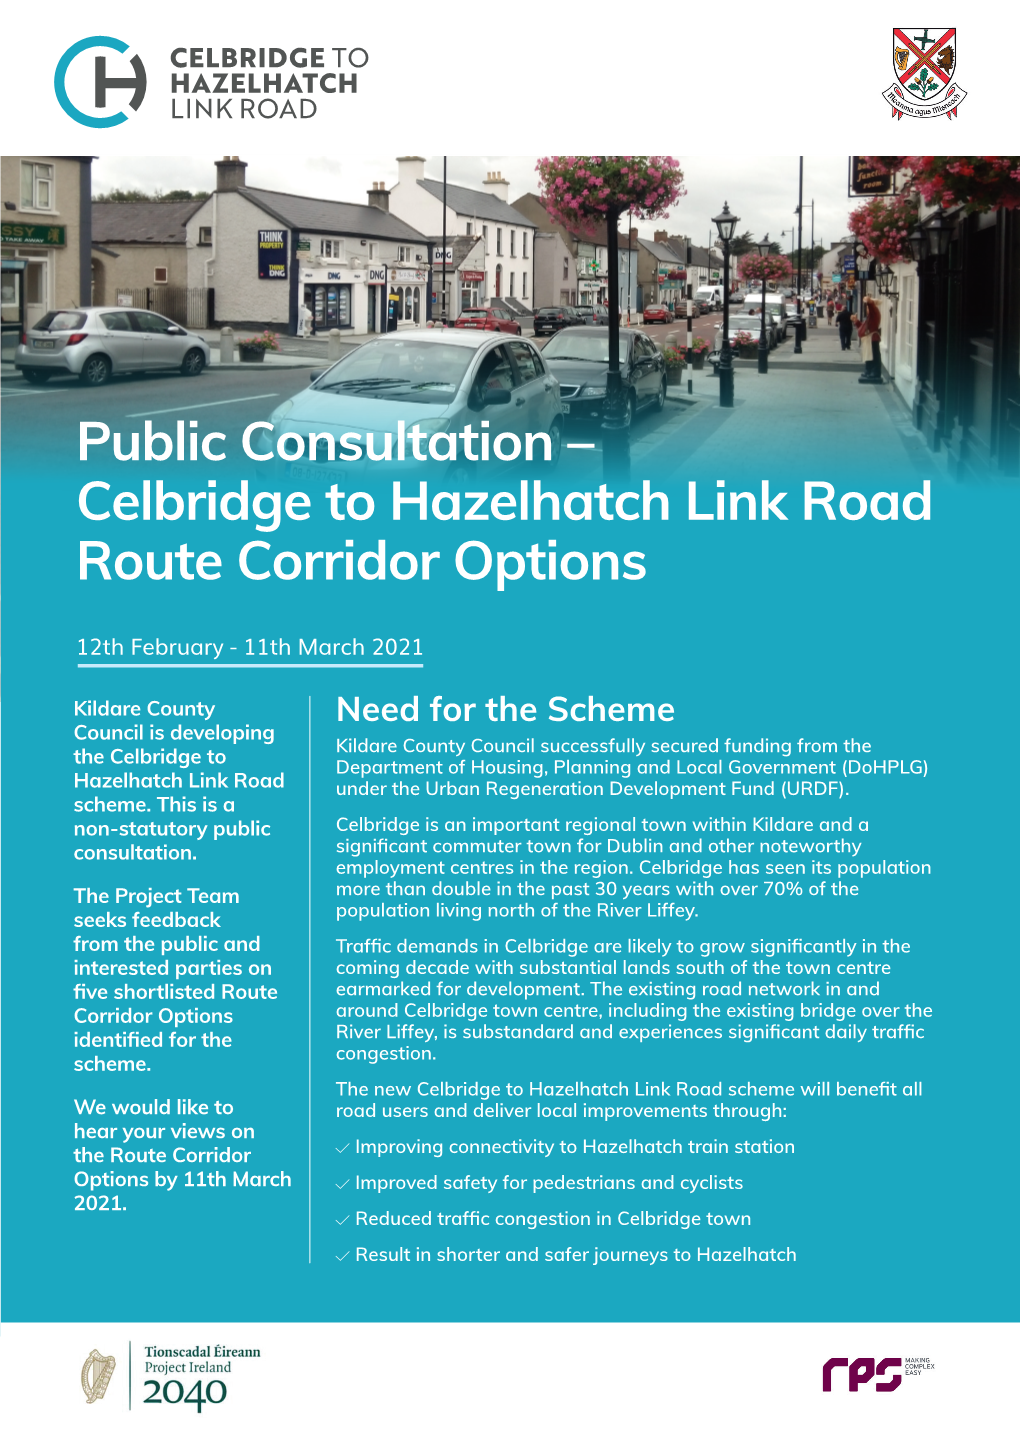 Celbridge to Hazelhatch Link Road Route Corridor Options